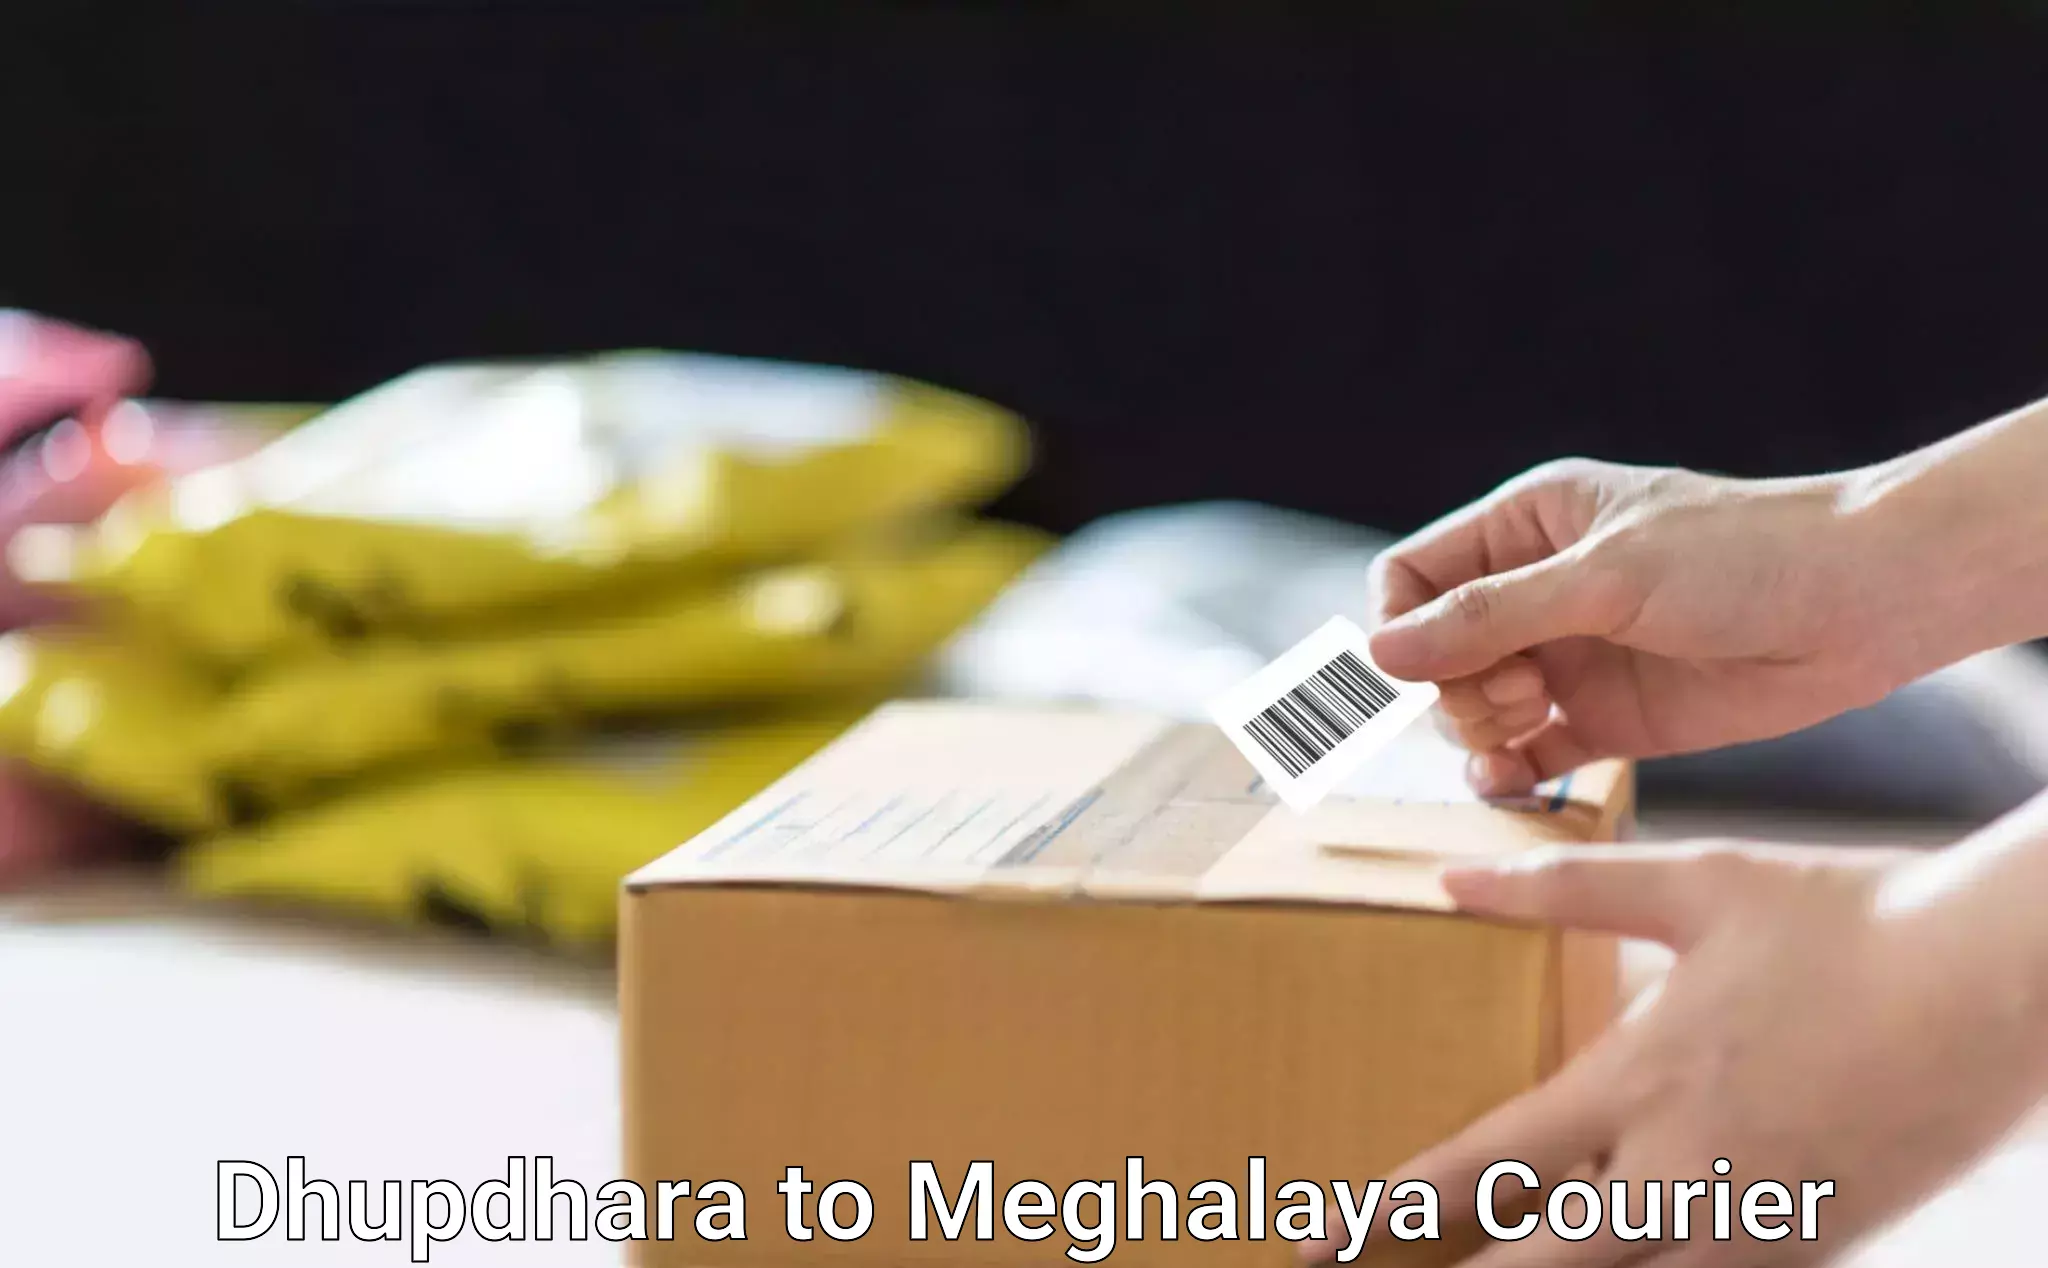 Nationwide delivery network Dhupdhara to Meghalaya